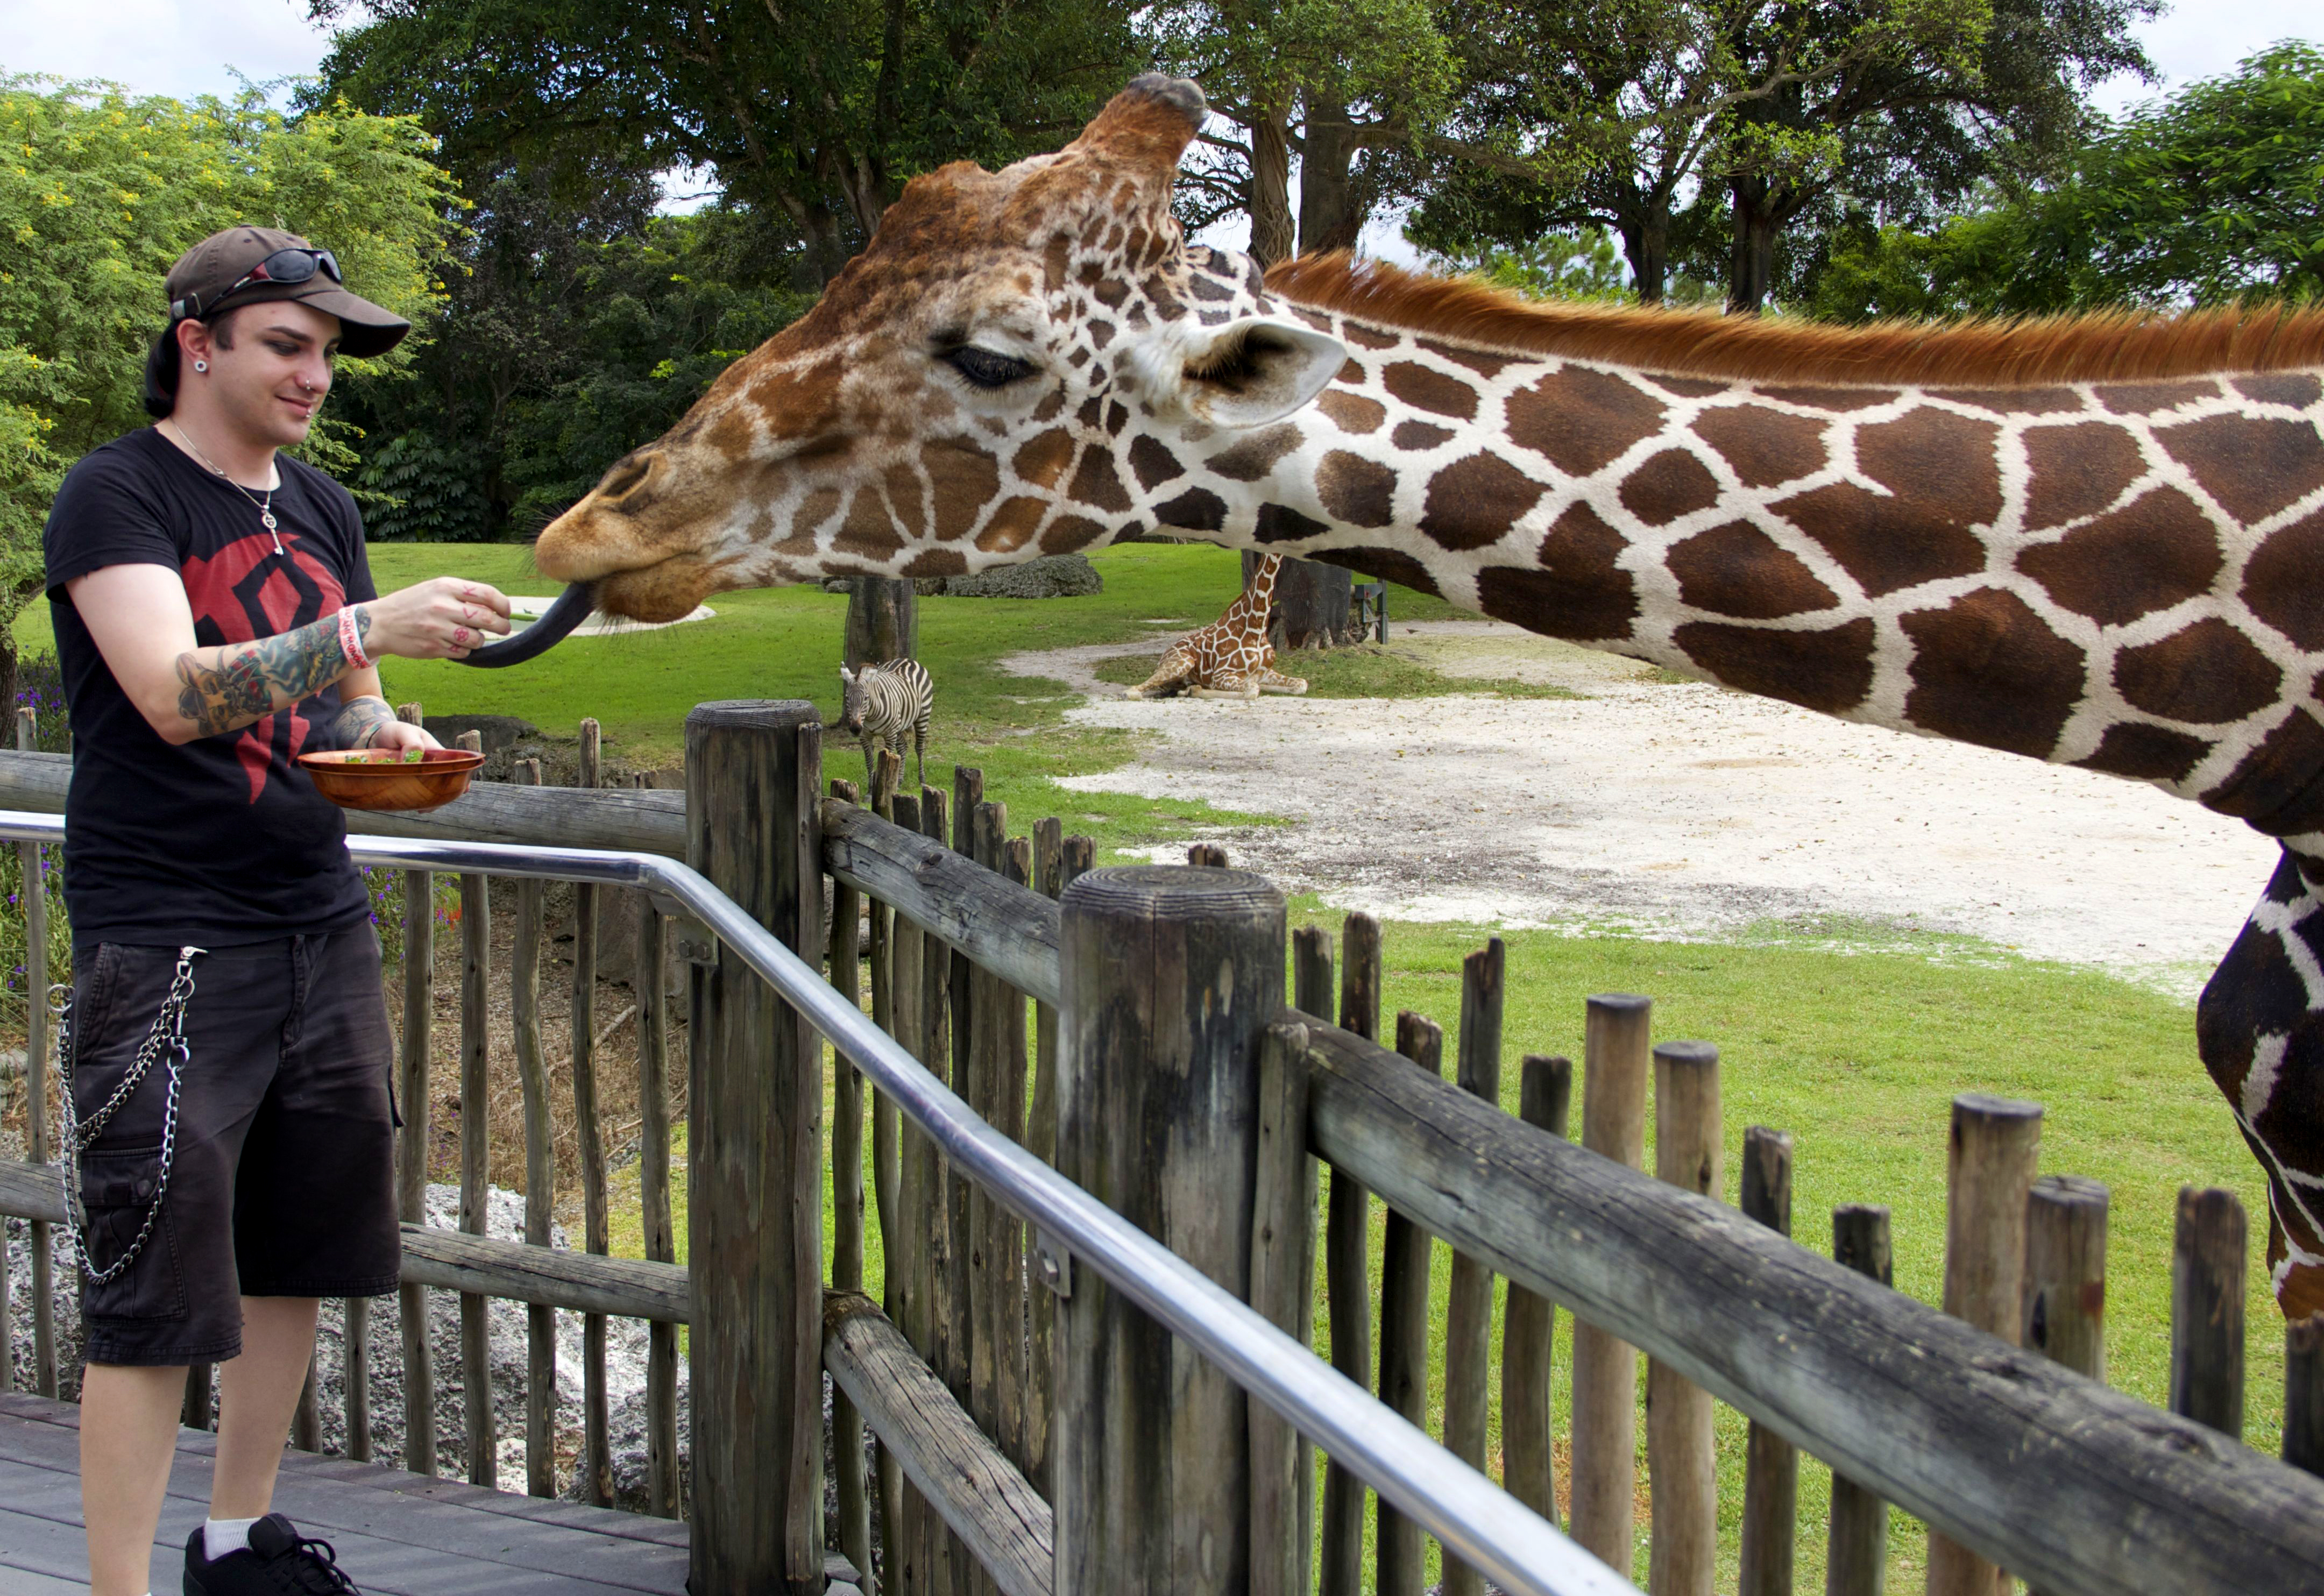 The Dro Feeding a Giraffe